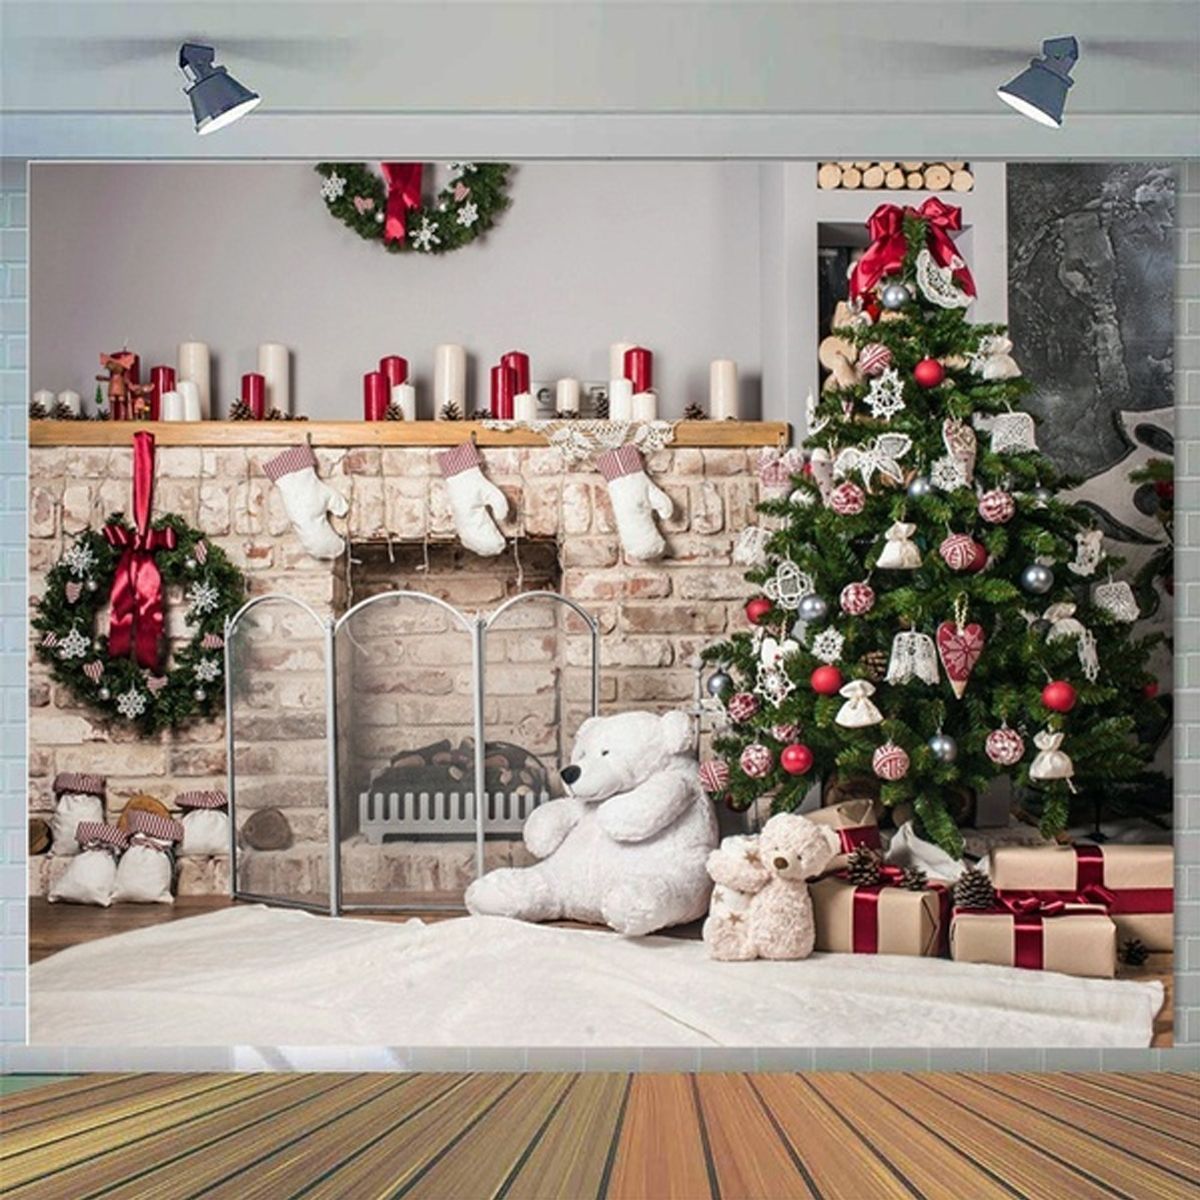 Christmas-Photography-Backdrop-3D-Tree-Brick-Fireplace-White-Bear-Printed-Vinyl-Photo-Studio-Backgro-1759899